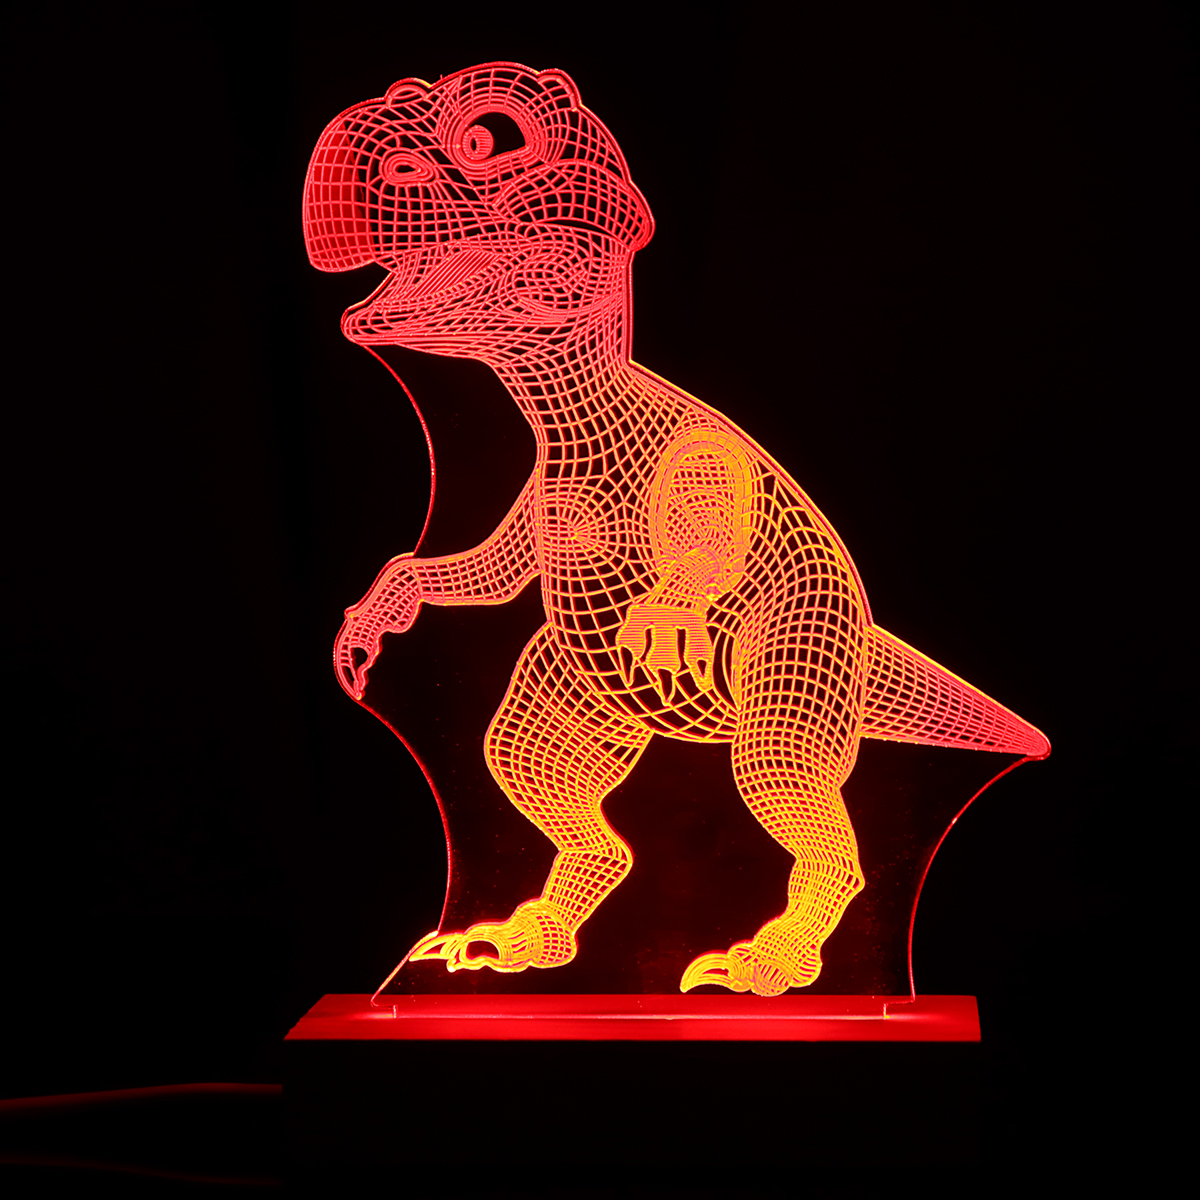 USB-3D-Dinosaur-LED-Desk-Lamp-Three-Colors-Night-Light-for-Bedroom-Home-Gift-Party-Decor-1708776-8